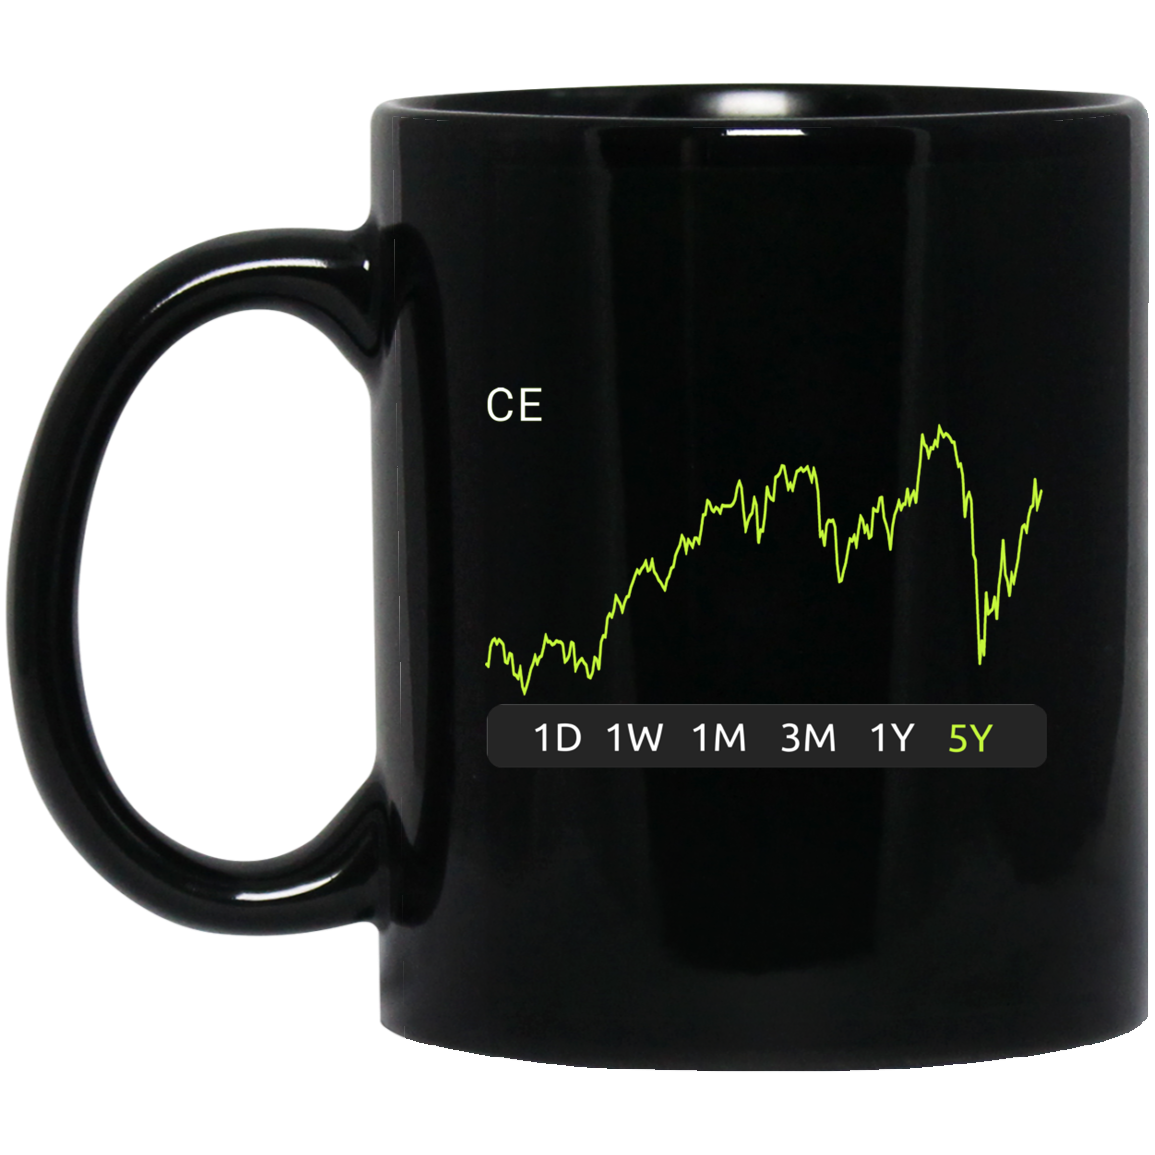 CE Stock 5y Mug